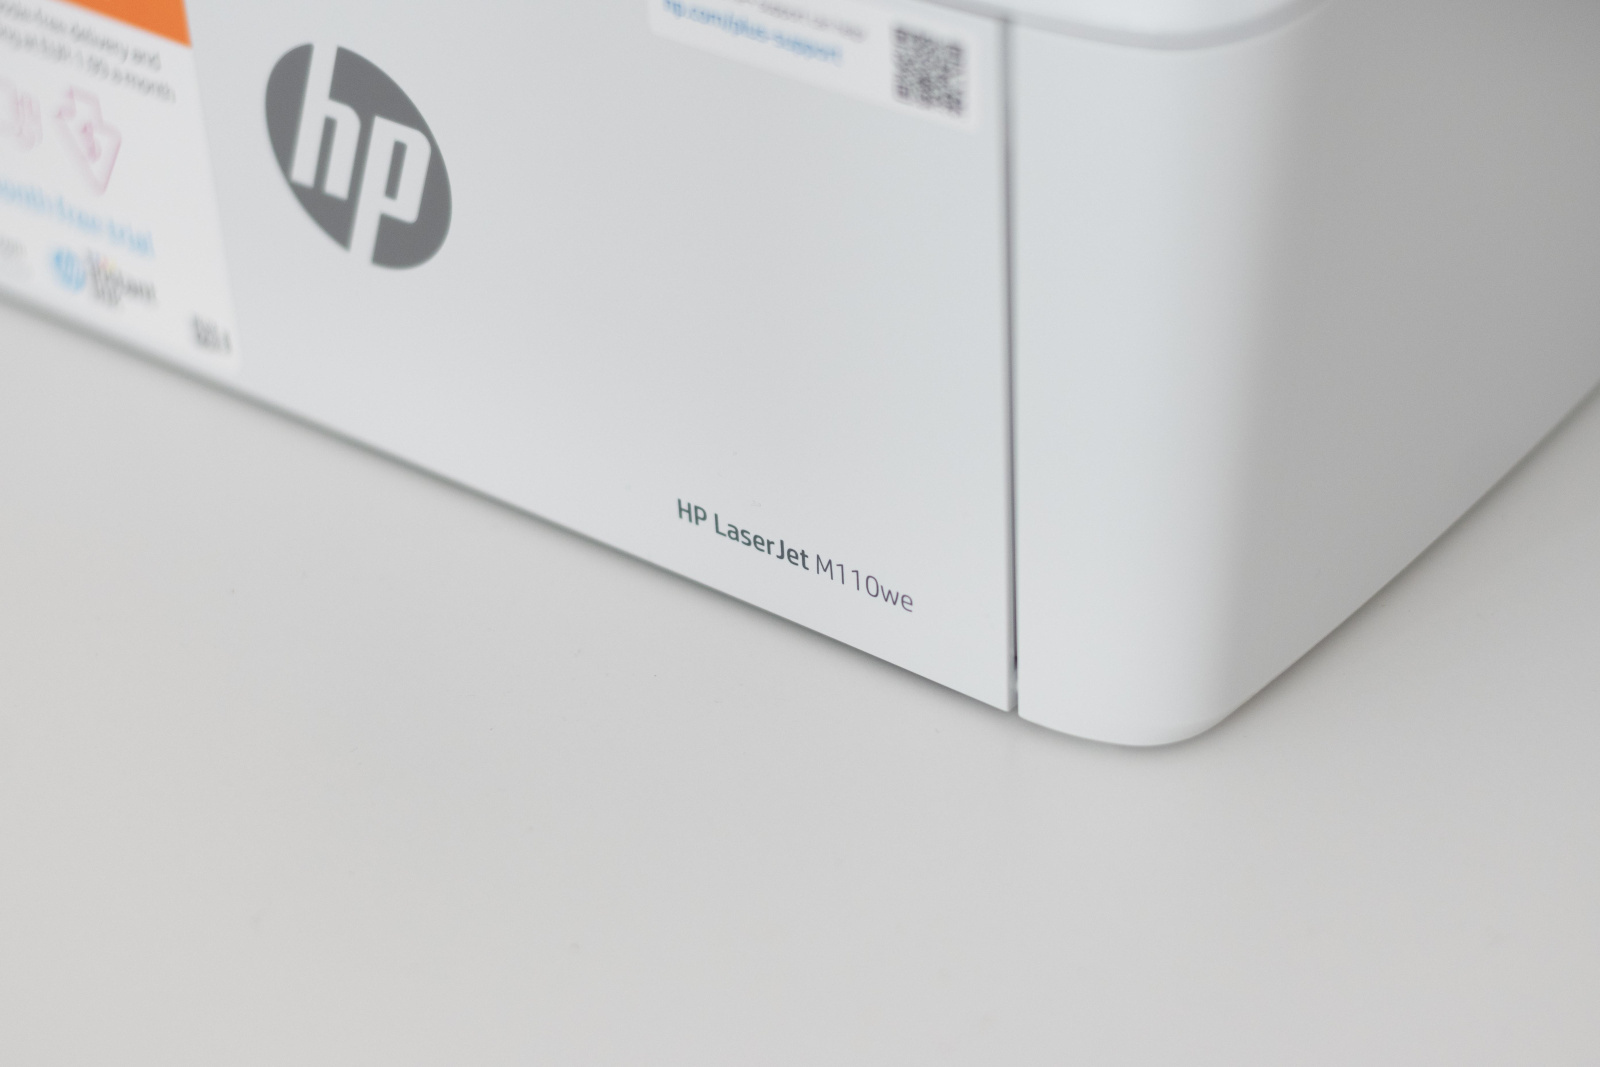 Szczegóły drukarki HP LaserJet M110we